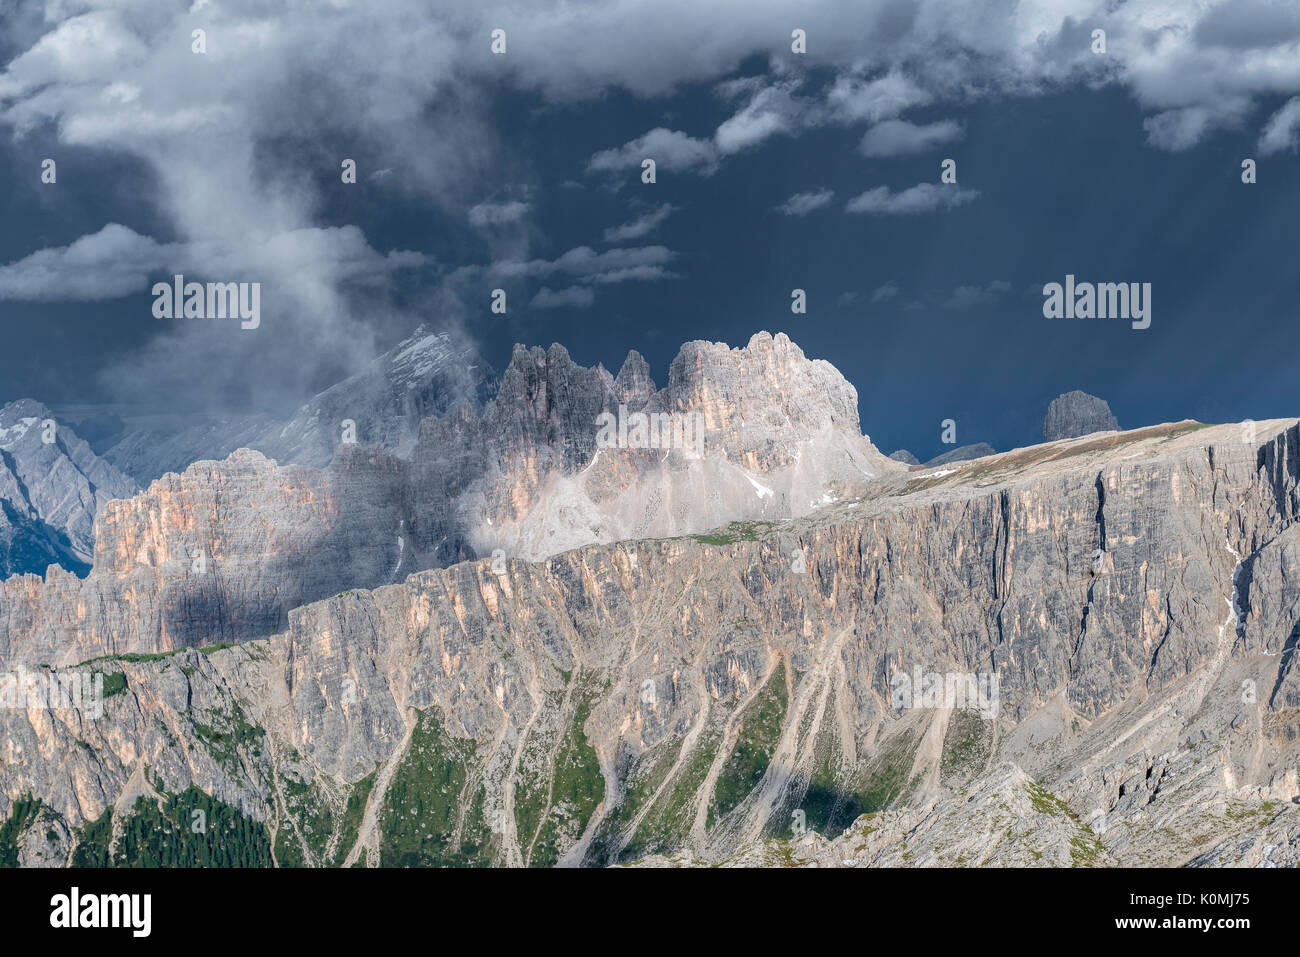 Nuvolau, Dolomiten, Venetien, Italien. Die Dolomiten nach dem Sturm. Von links Antelao, Croda da Lago und Lastoi de Formin Stockfoto